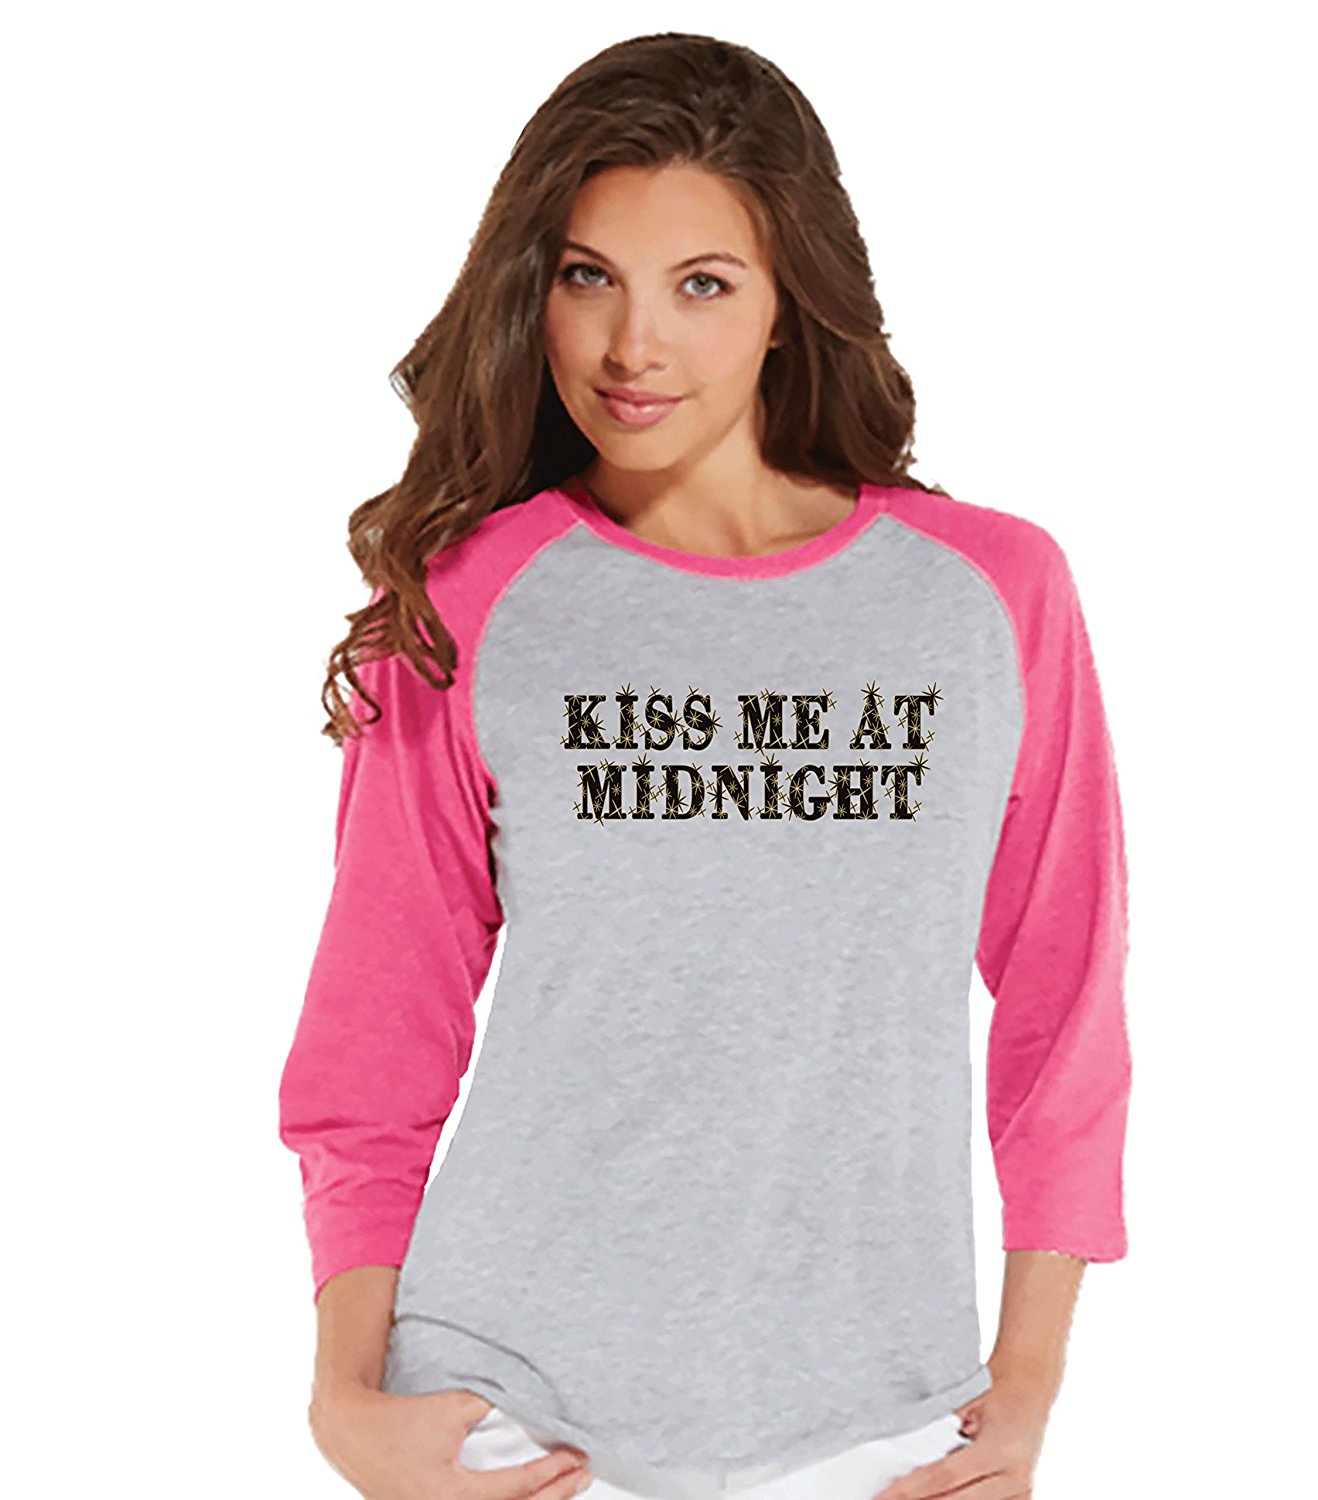 Kiss Me At Midnight - Women's Pink Raglan Tee